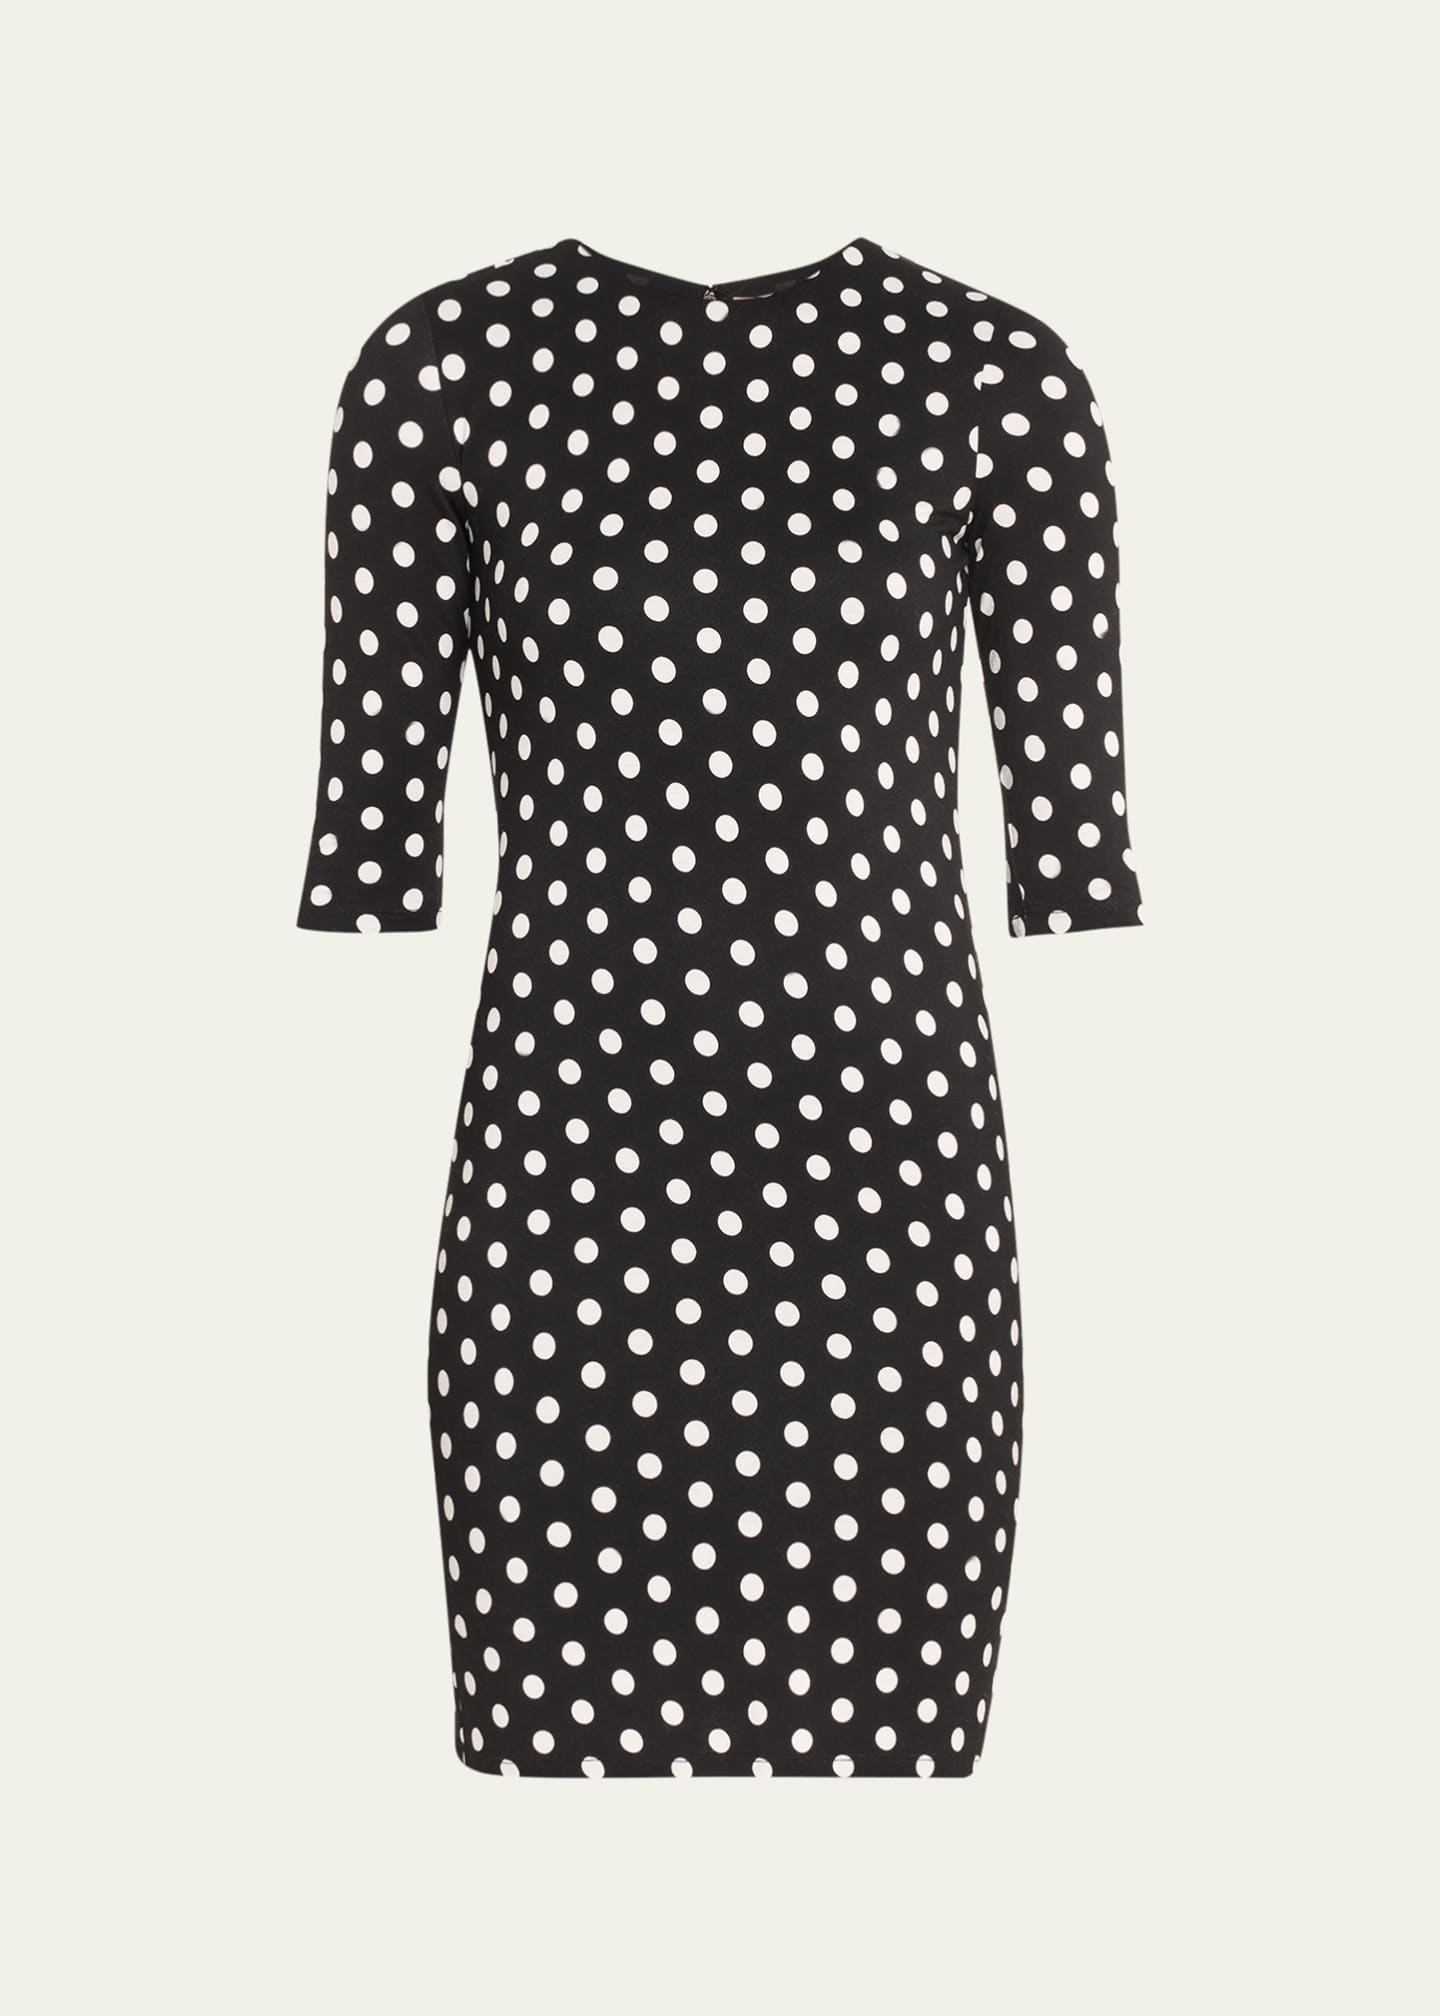 Lotte Dotte Dress, black/white - Bergstrom Originals